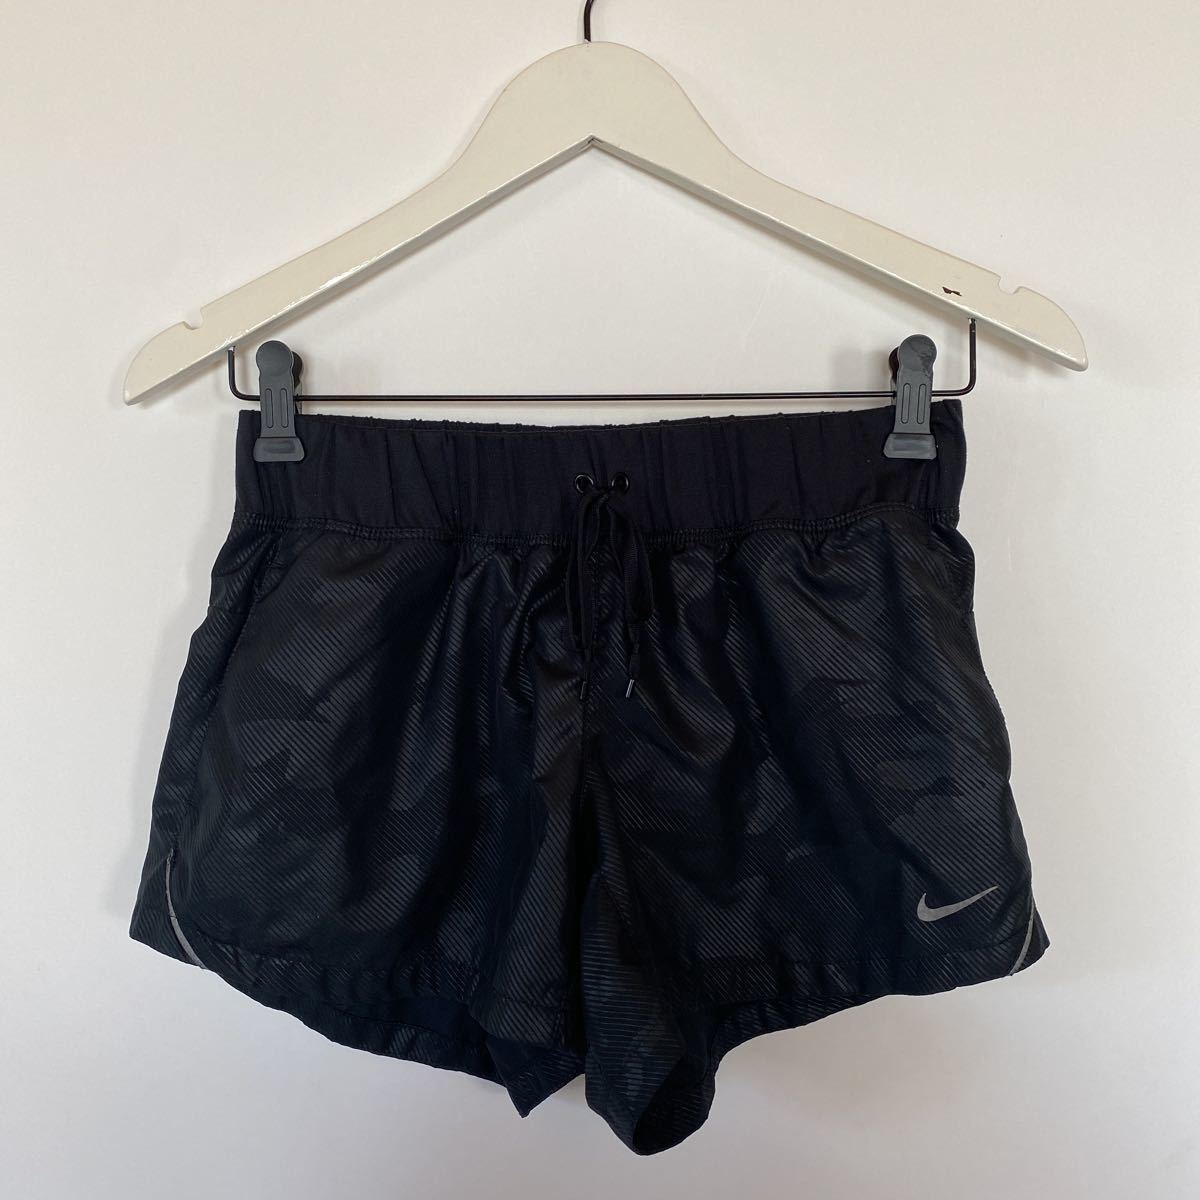 NIKE Nike шорты черный dry Fit M спорт одежда 